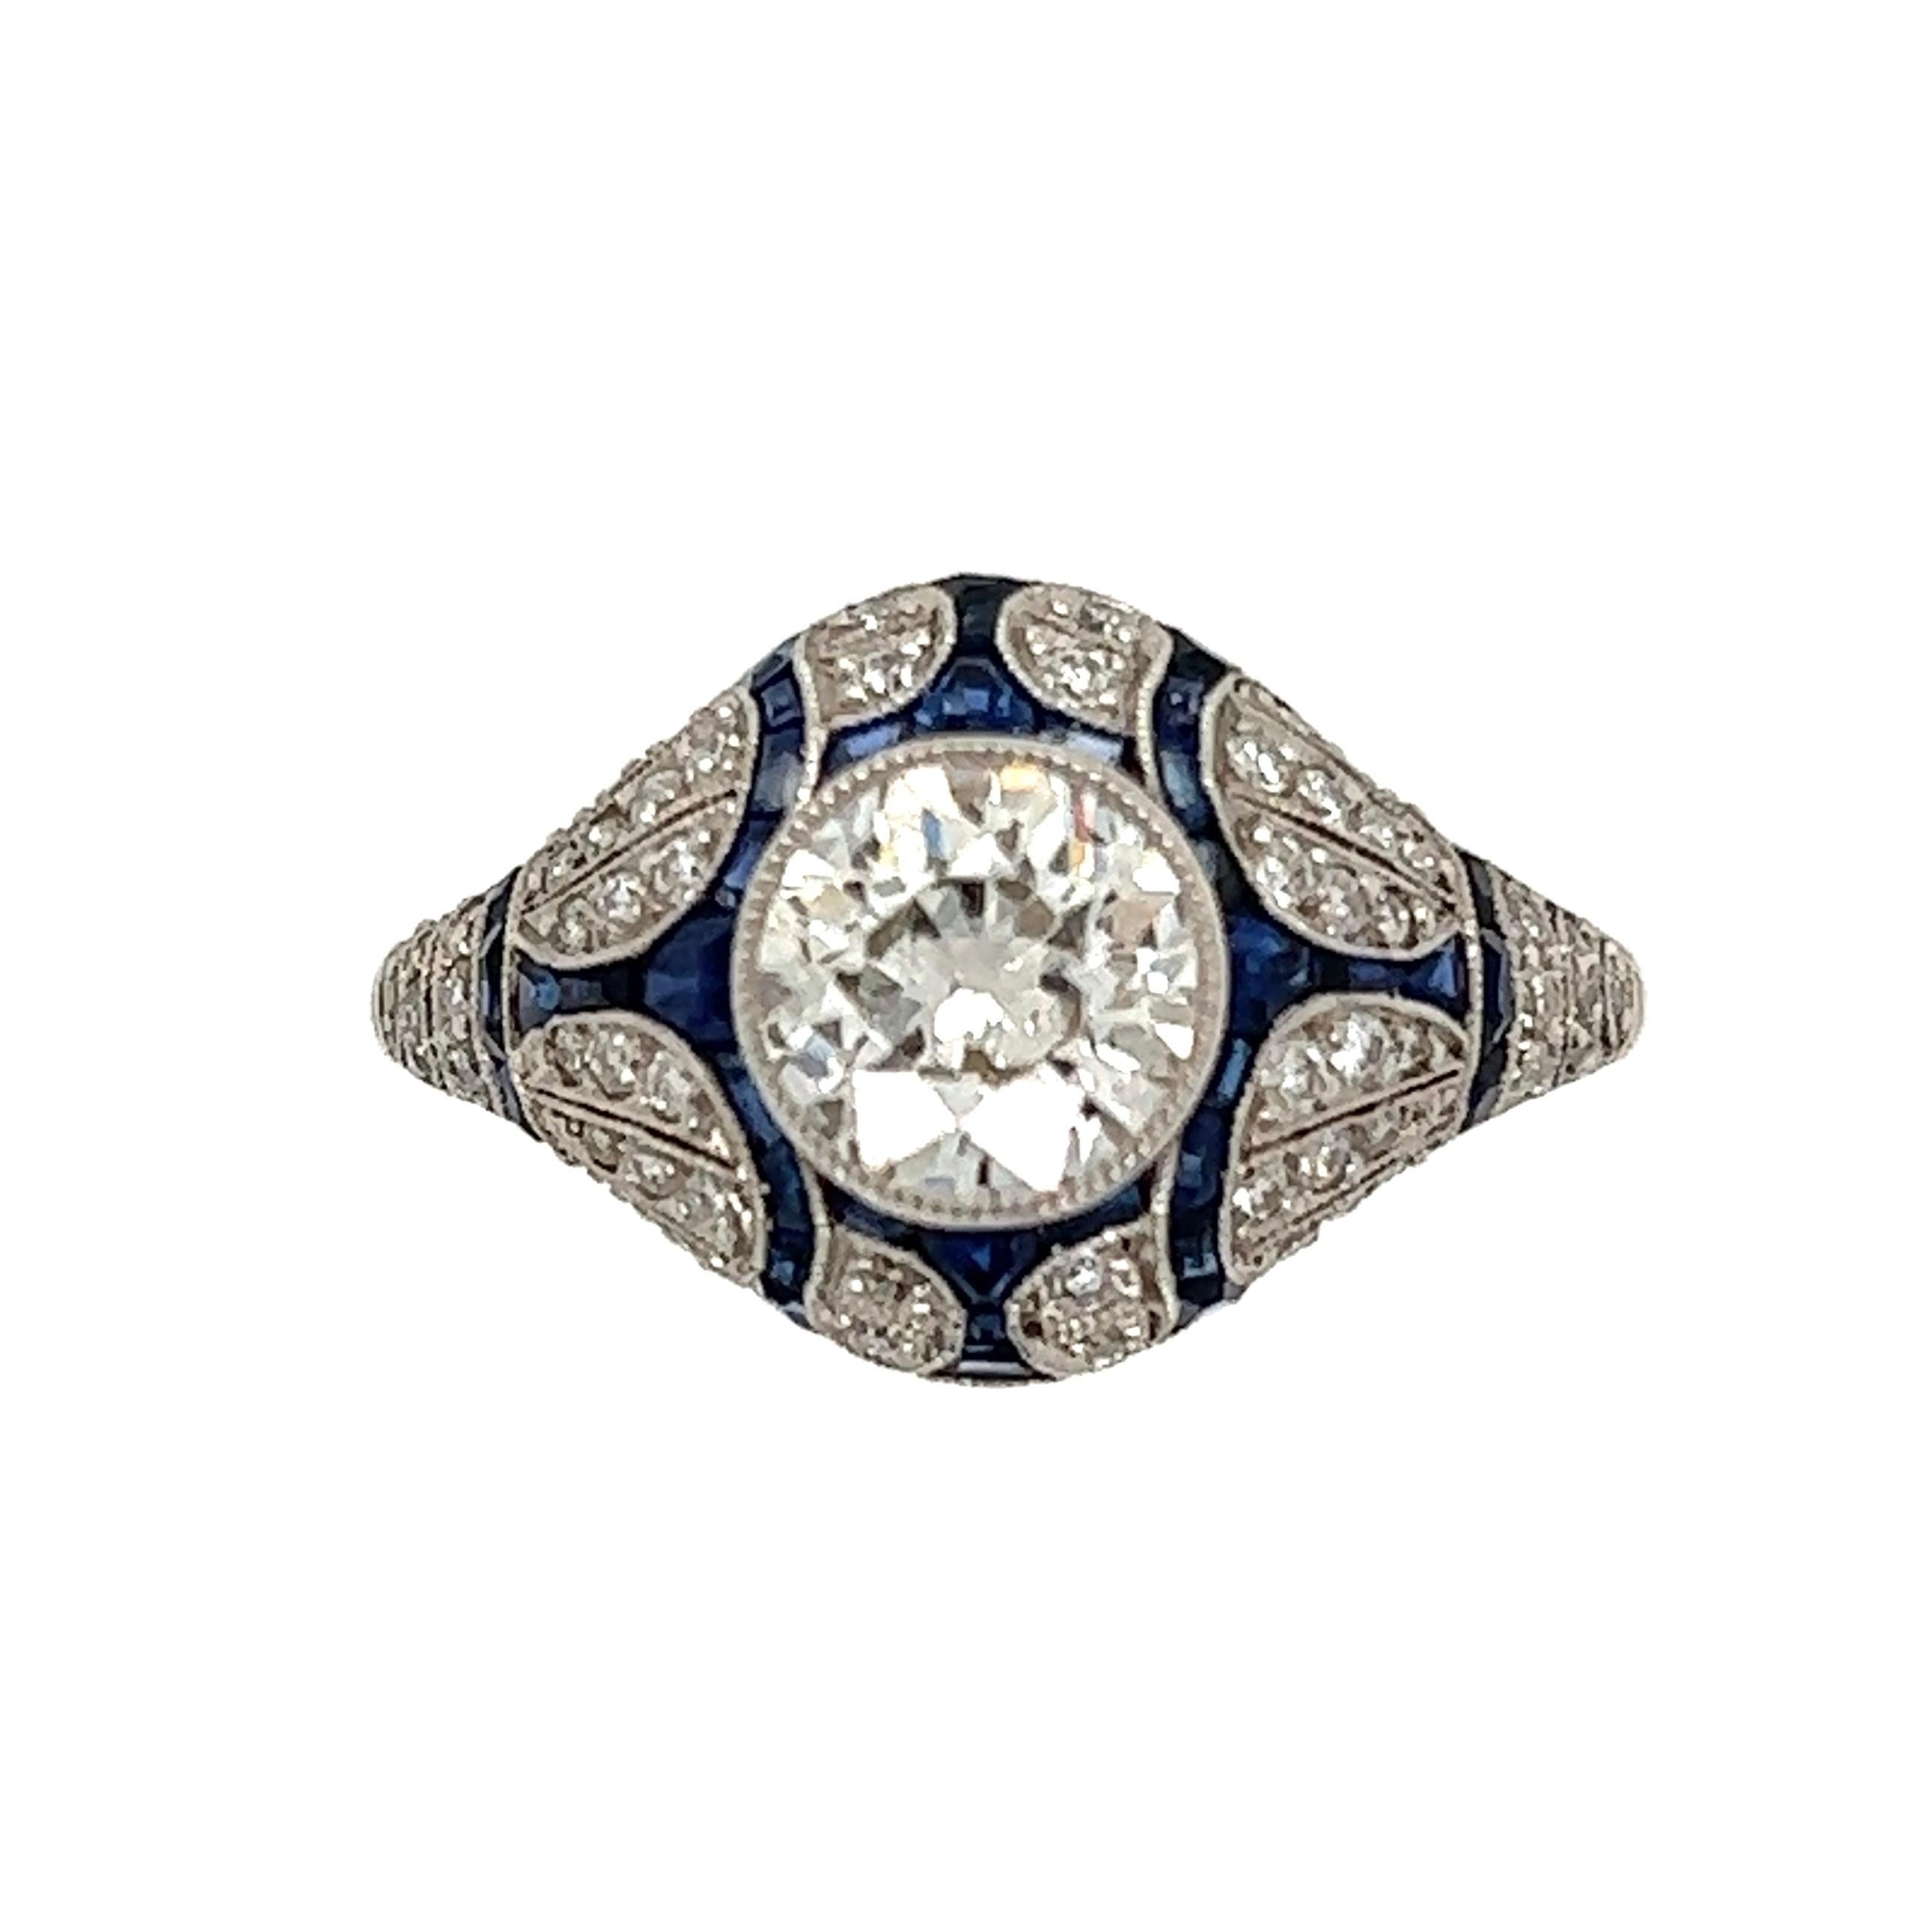 Diamond and Sapphire Art Deco Revival Platinum Ring Fine Estate Jewelry 2